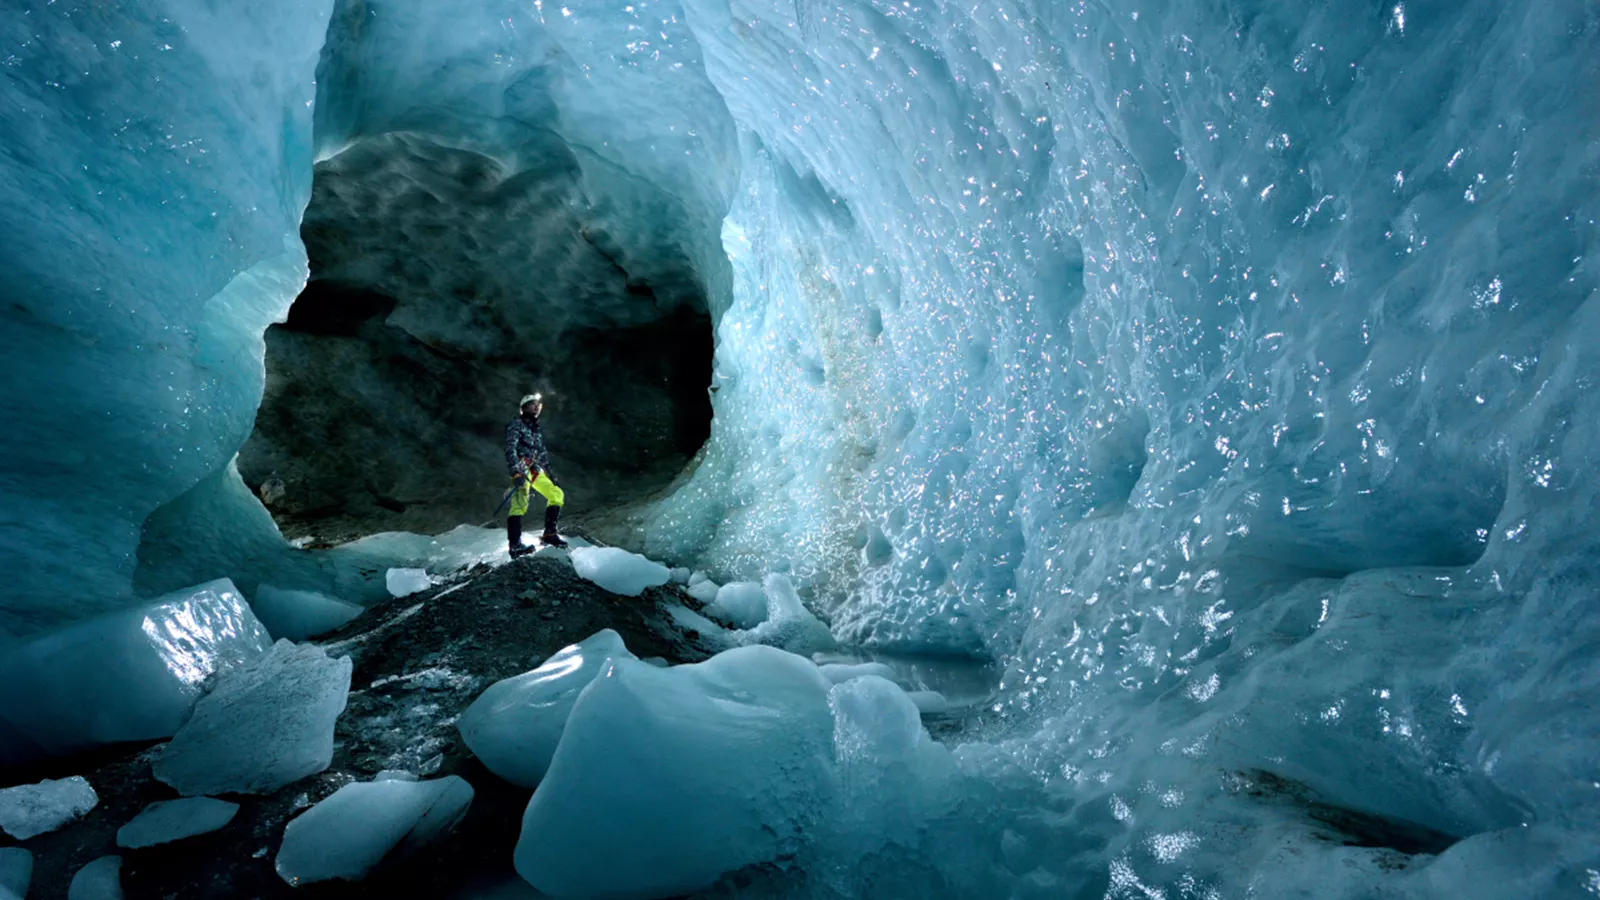 Gorner Glacier in Switzerland, Europe | Caves & Underground Places,Glaciers - Rated 4